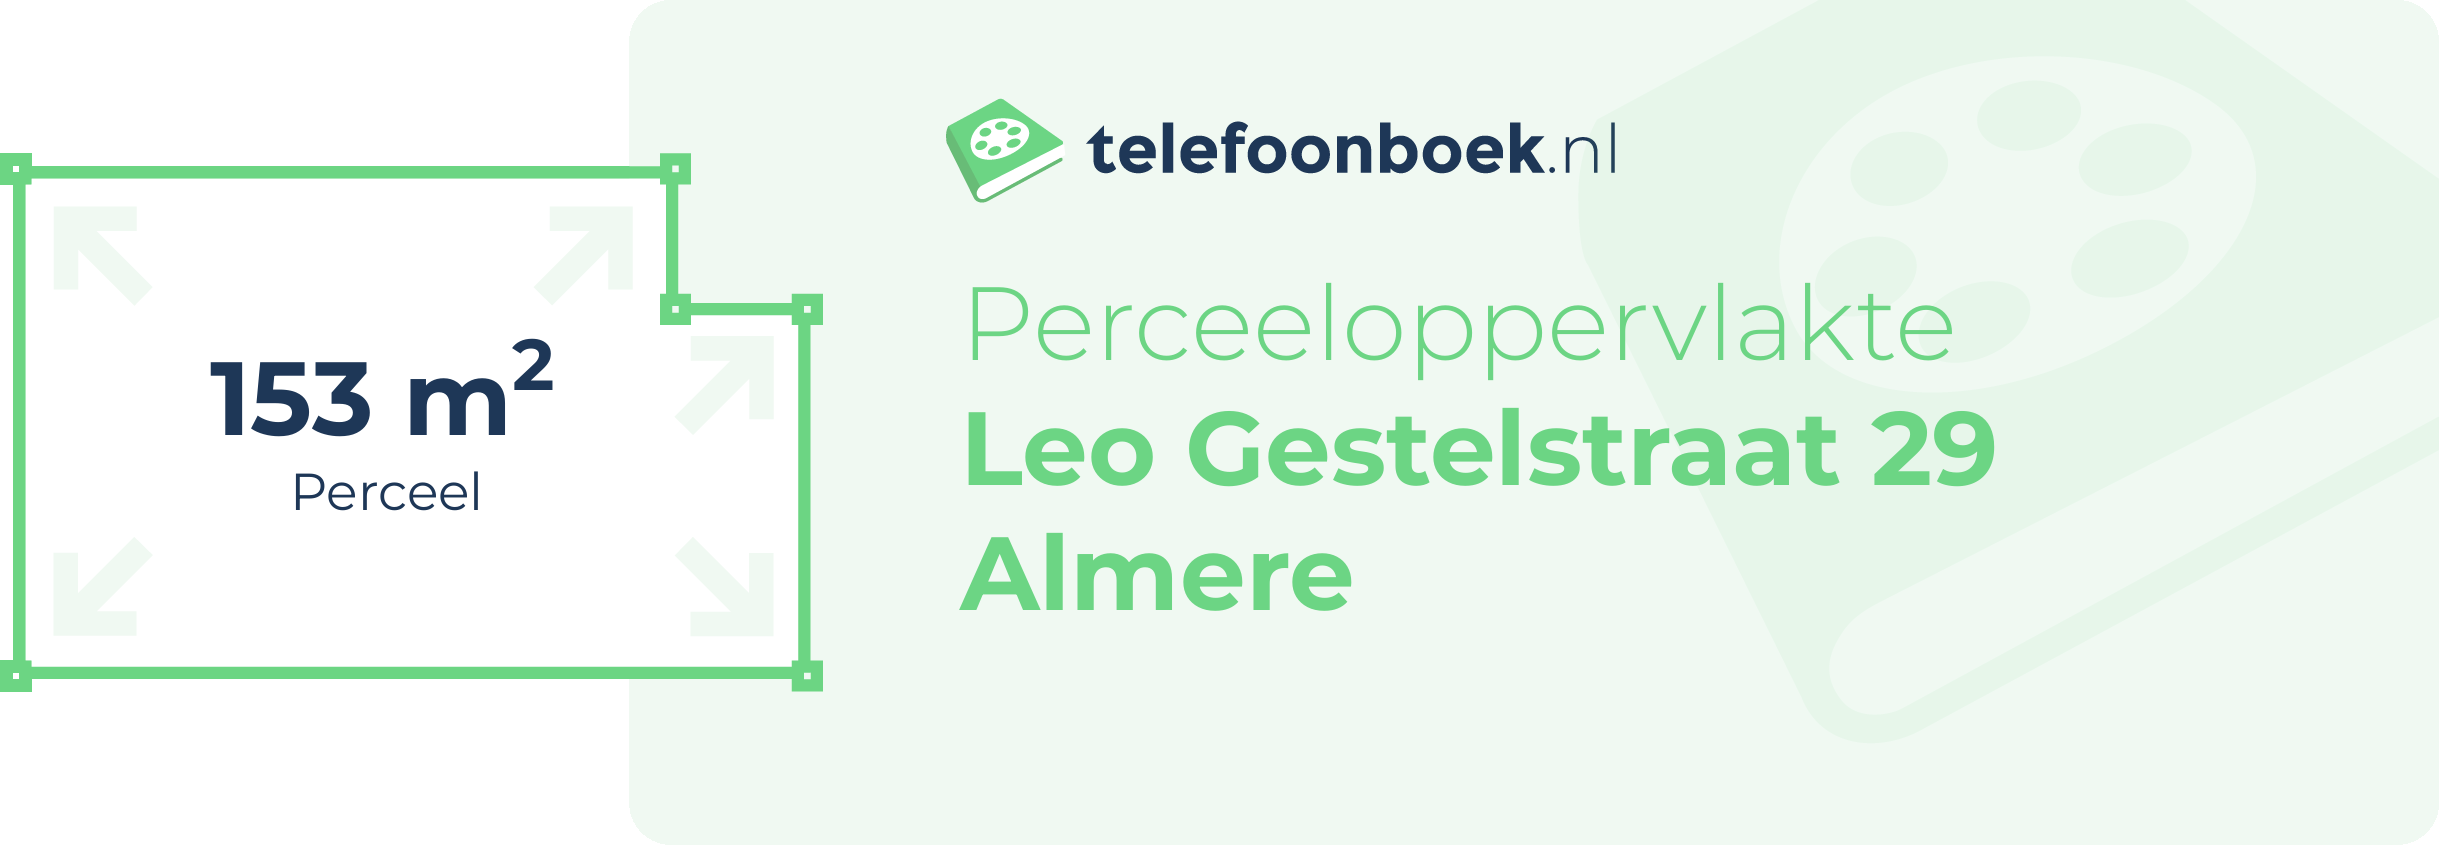 Perceeloppervlakte Leo Gestelstraat 29 Almere